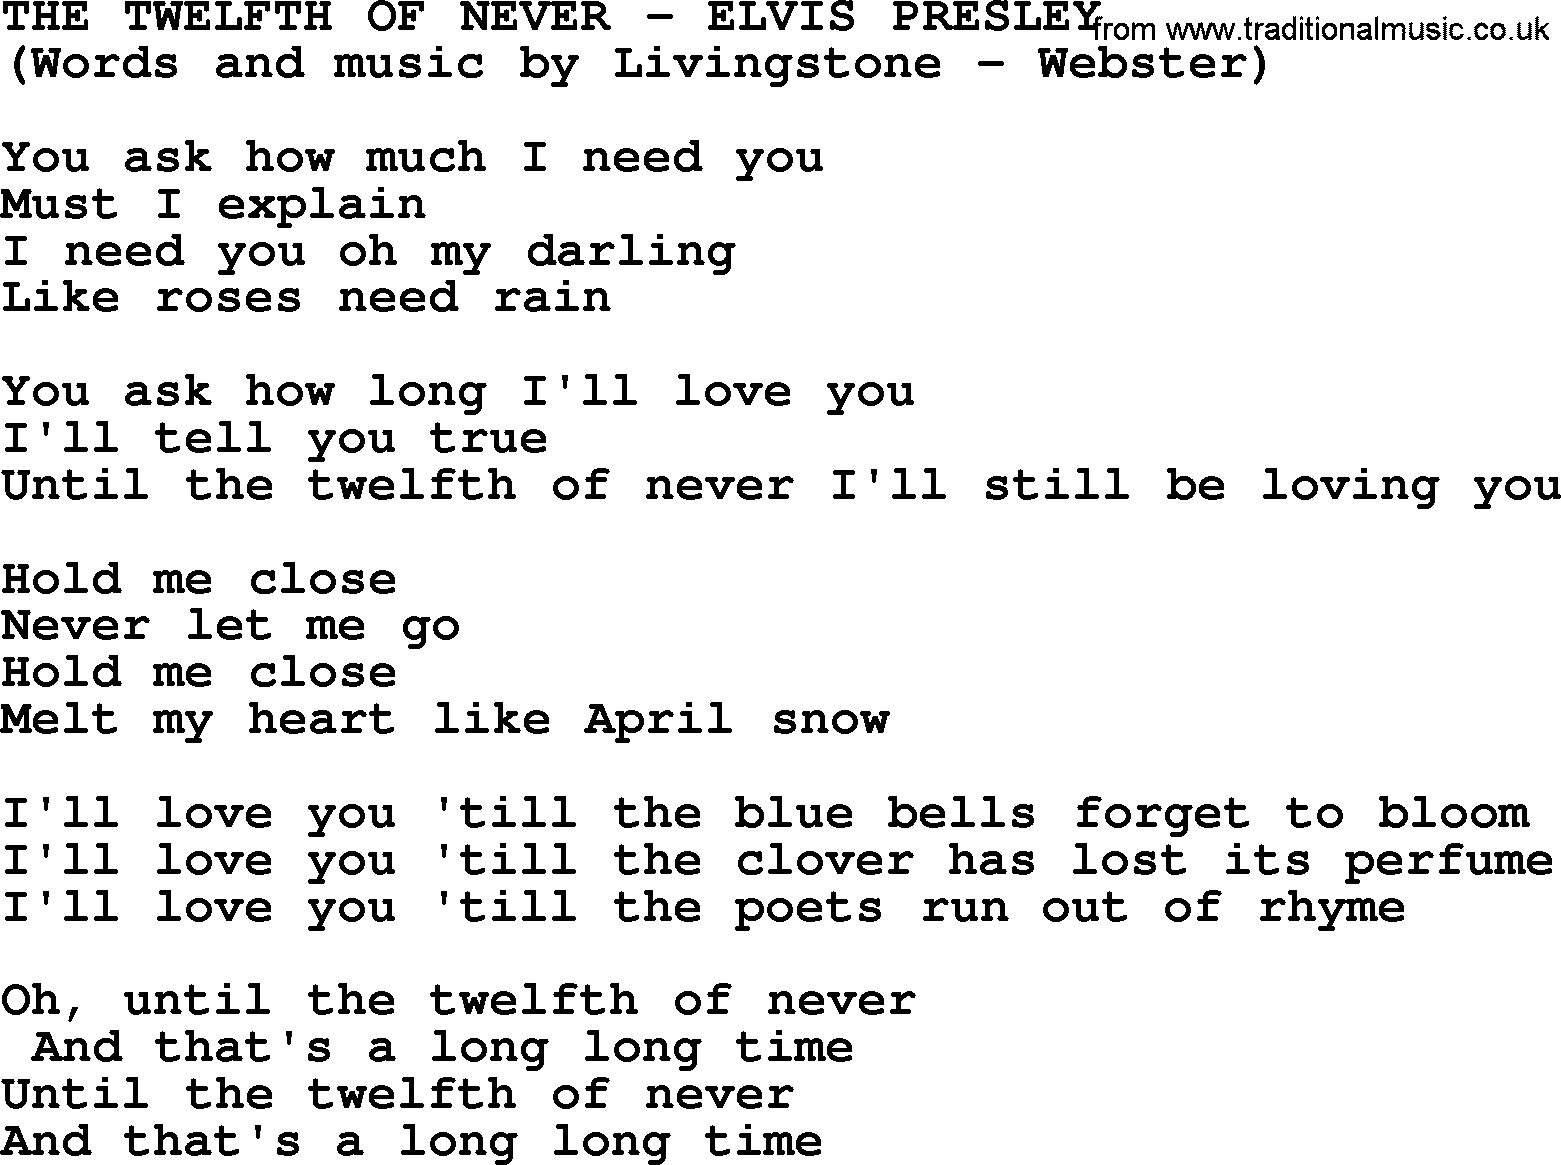 Elvis Presley song: The Twelfth Of Never lyrics